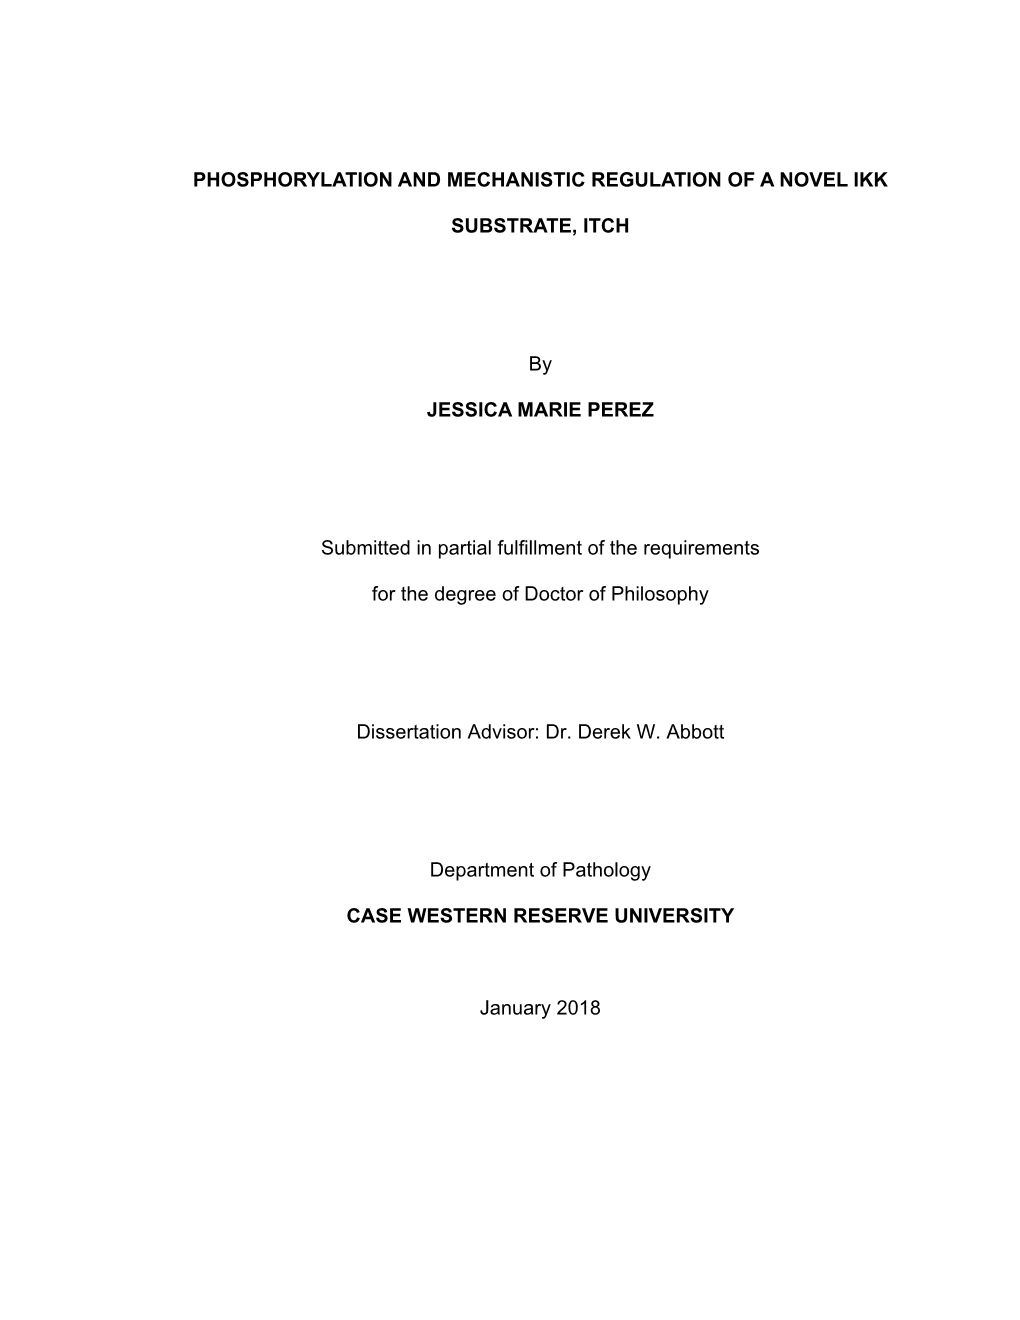 Phosphorylation and Mechanistic Regulation of a Novel Ikk